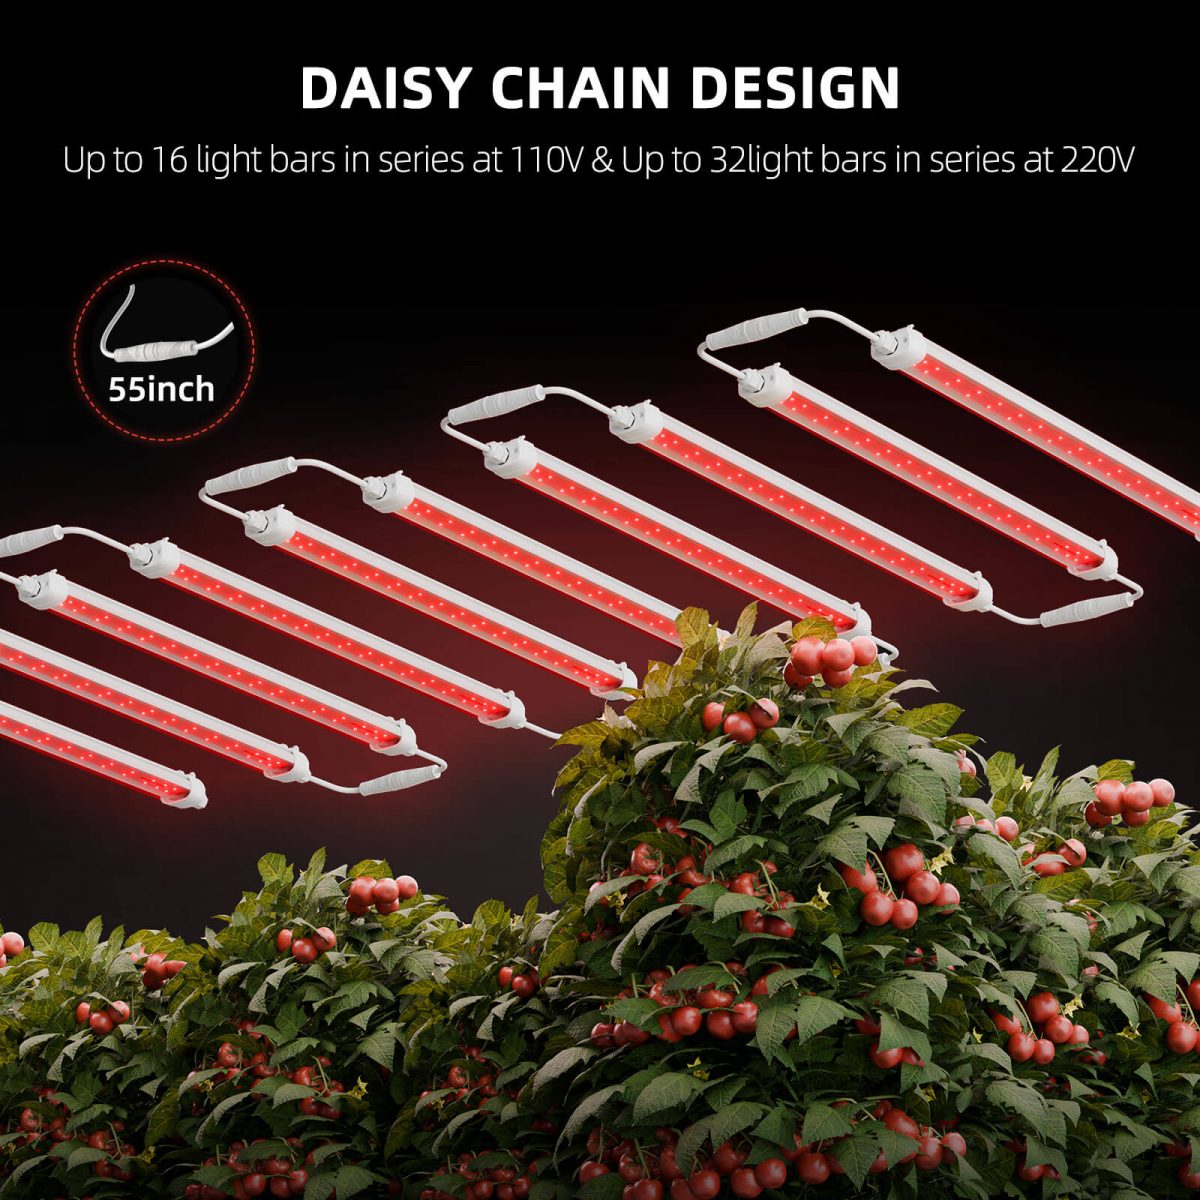 SF-Glowr40 daisy chain design